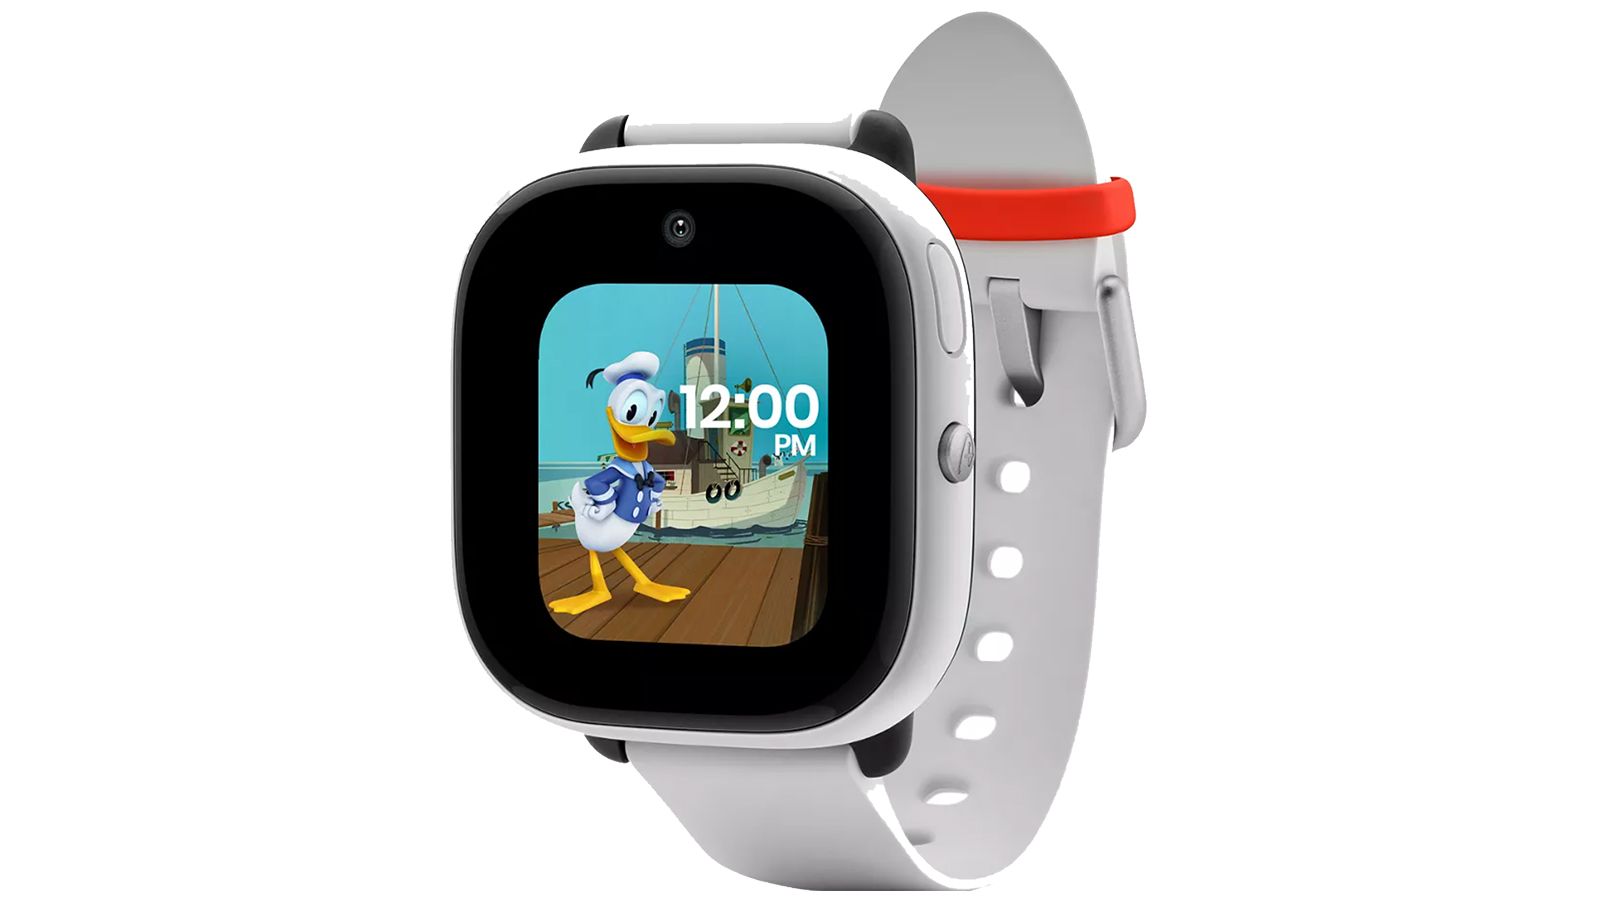 GizmoWatch 2: Kids smartwatch, real-time location